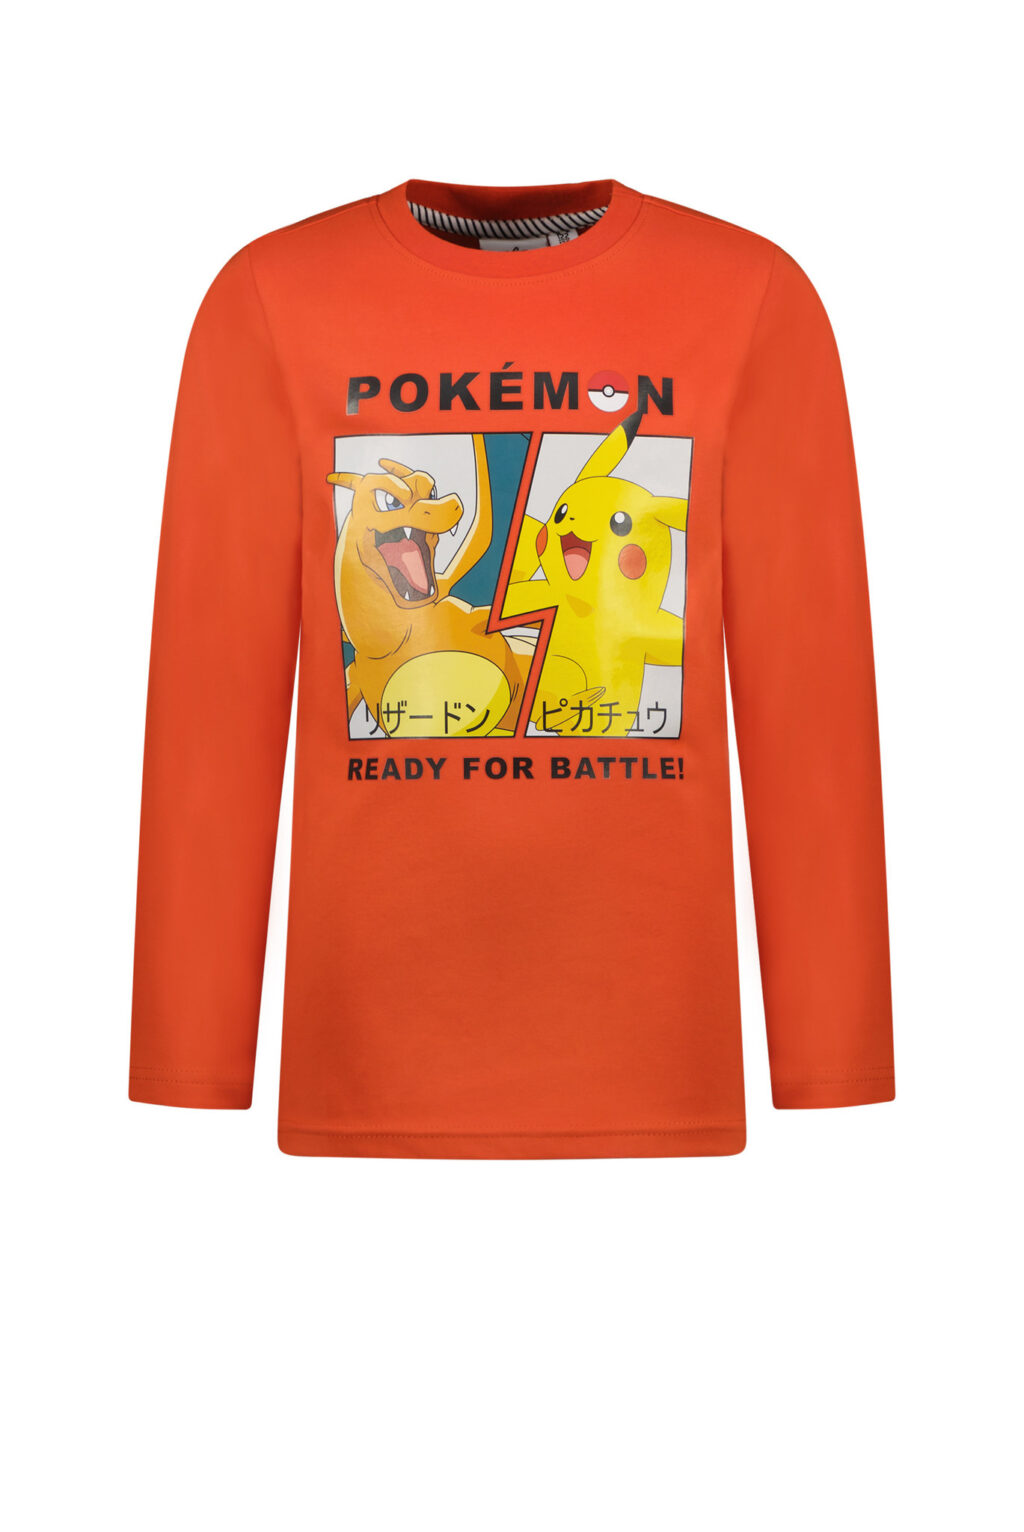 Tygo & Vito Jongens shirt 'Pokemon' - Donker oranje ~ Spinze.nl